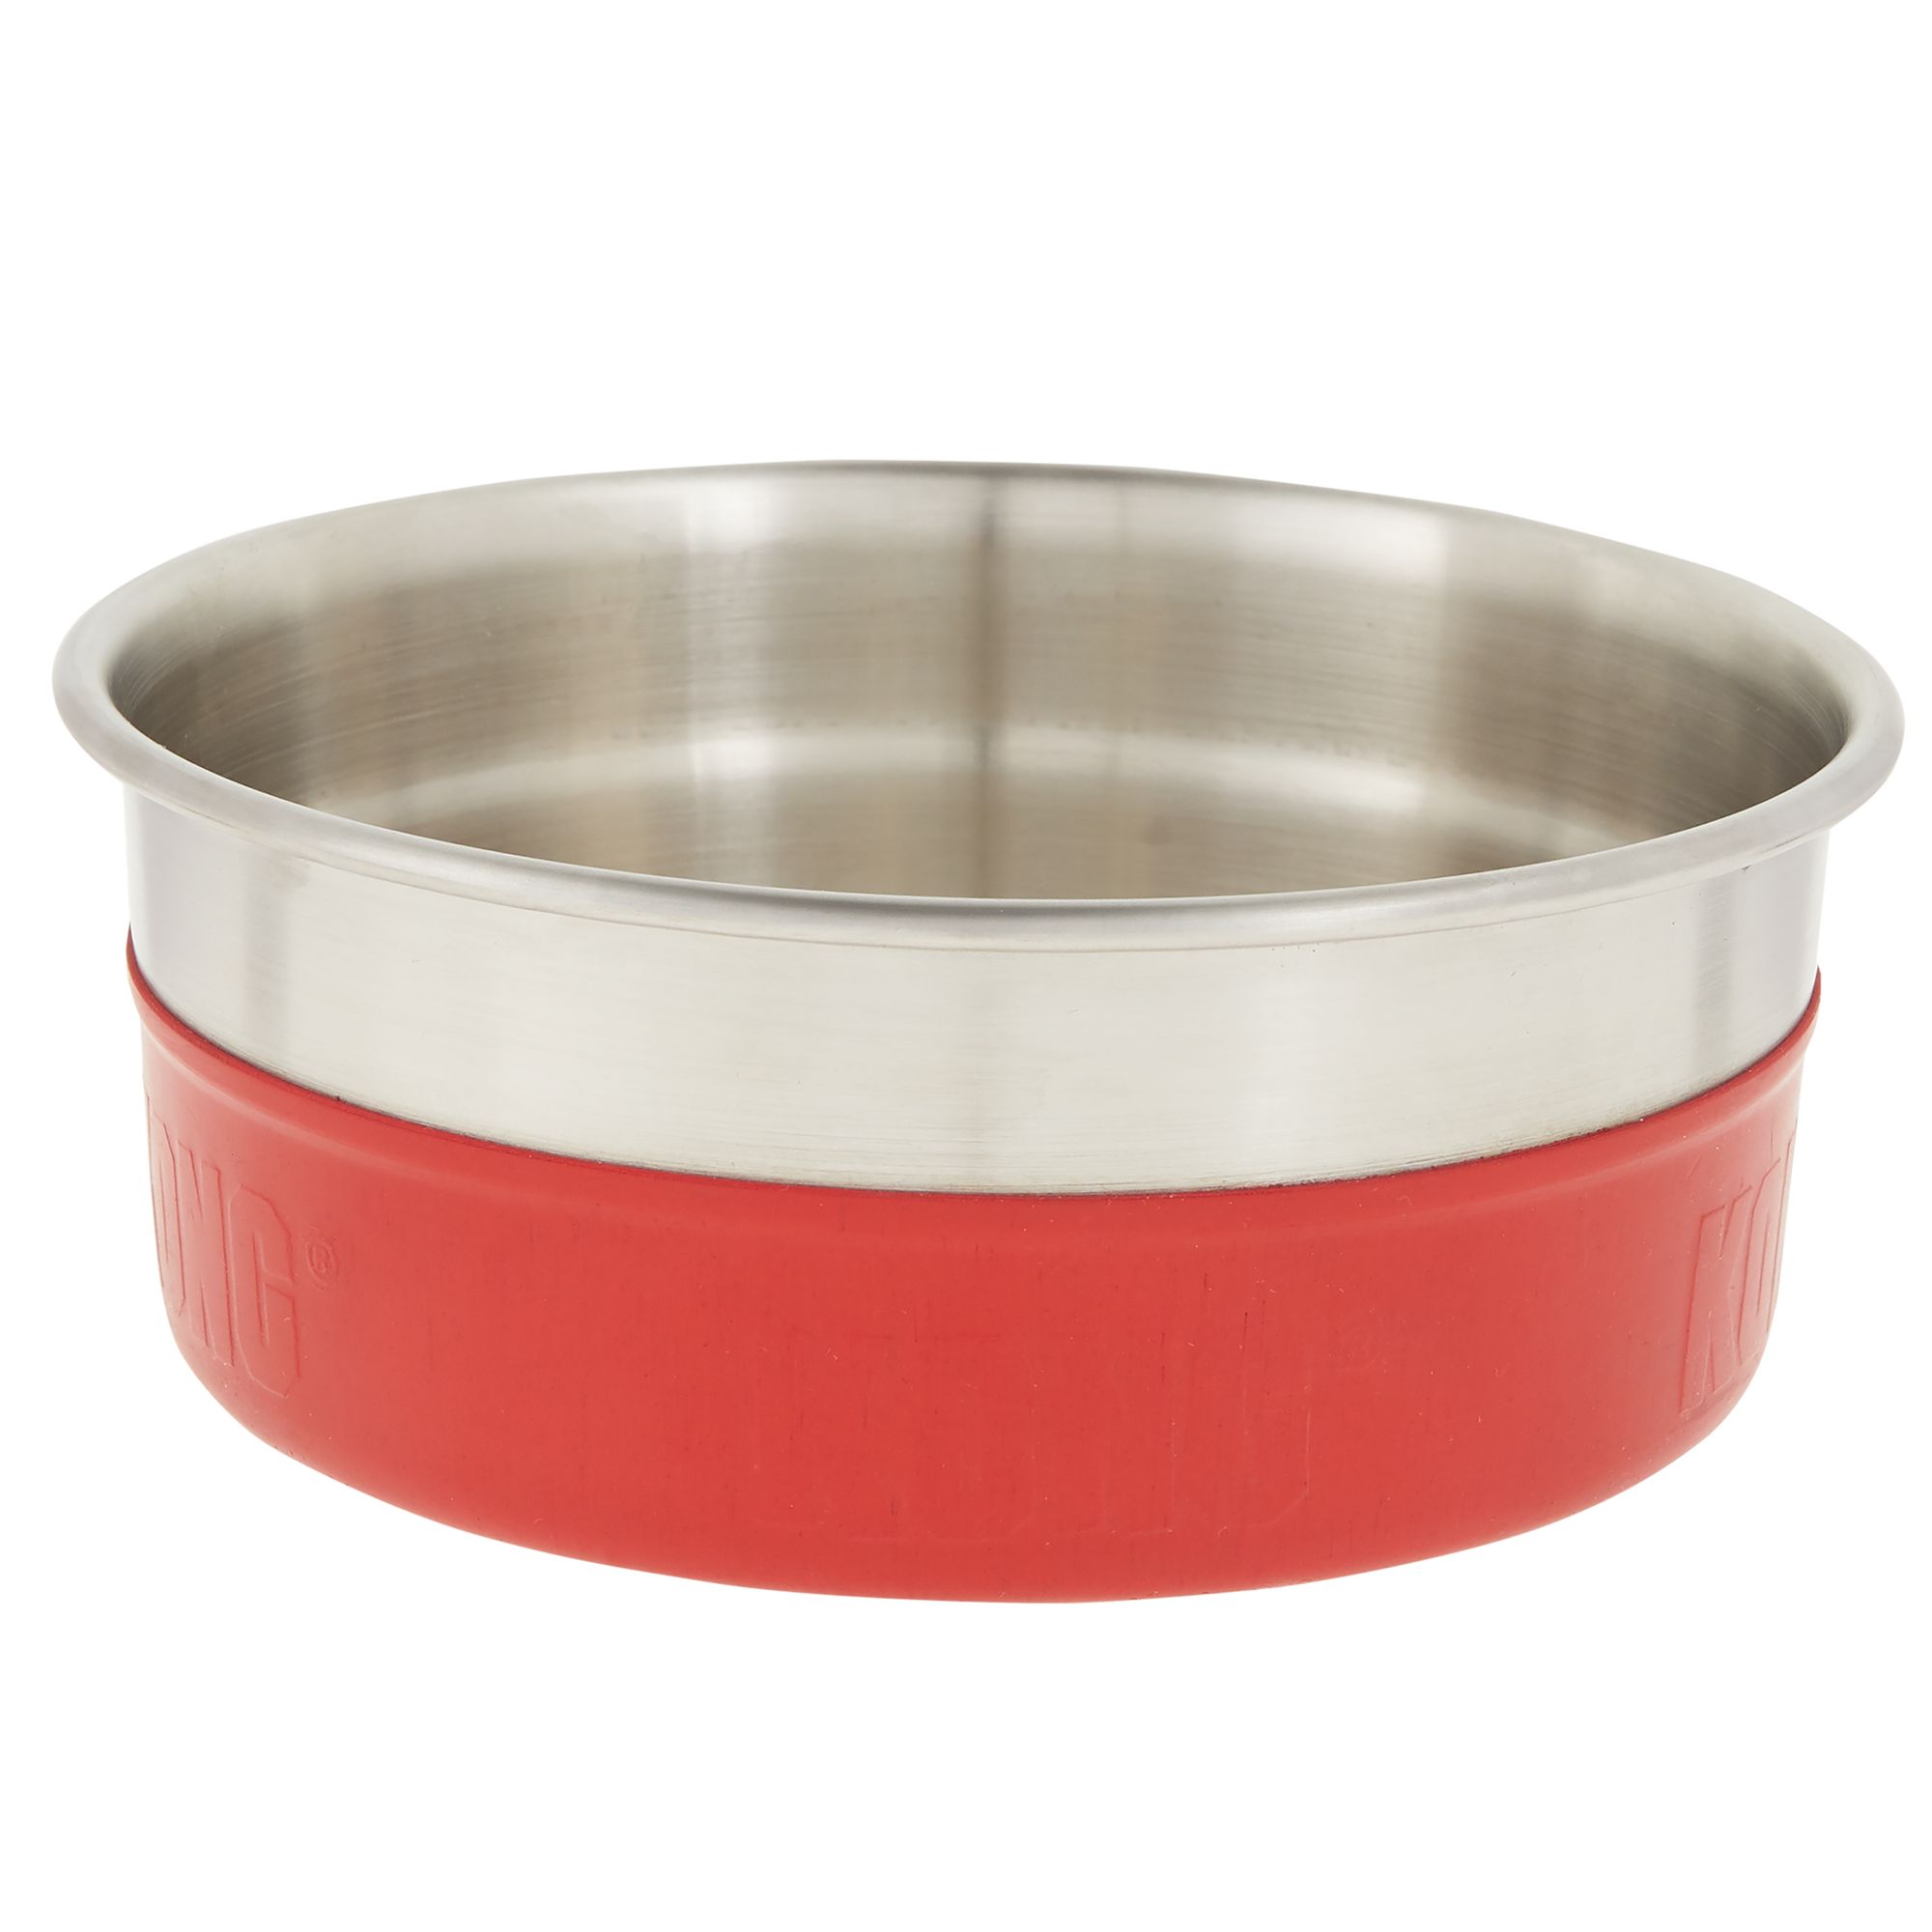 petsmart dog food bowls